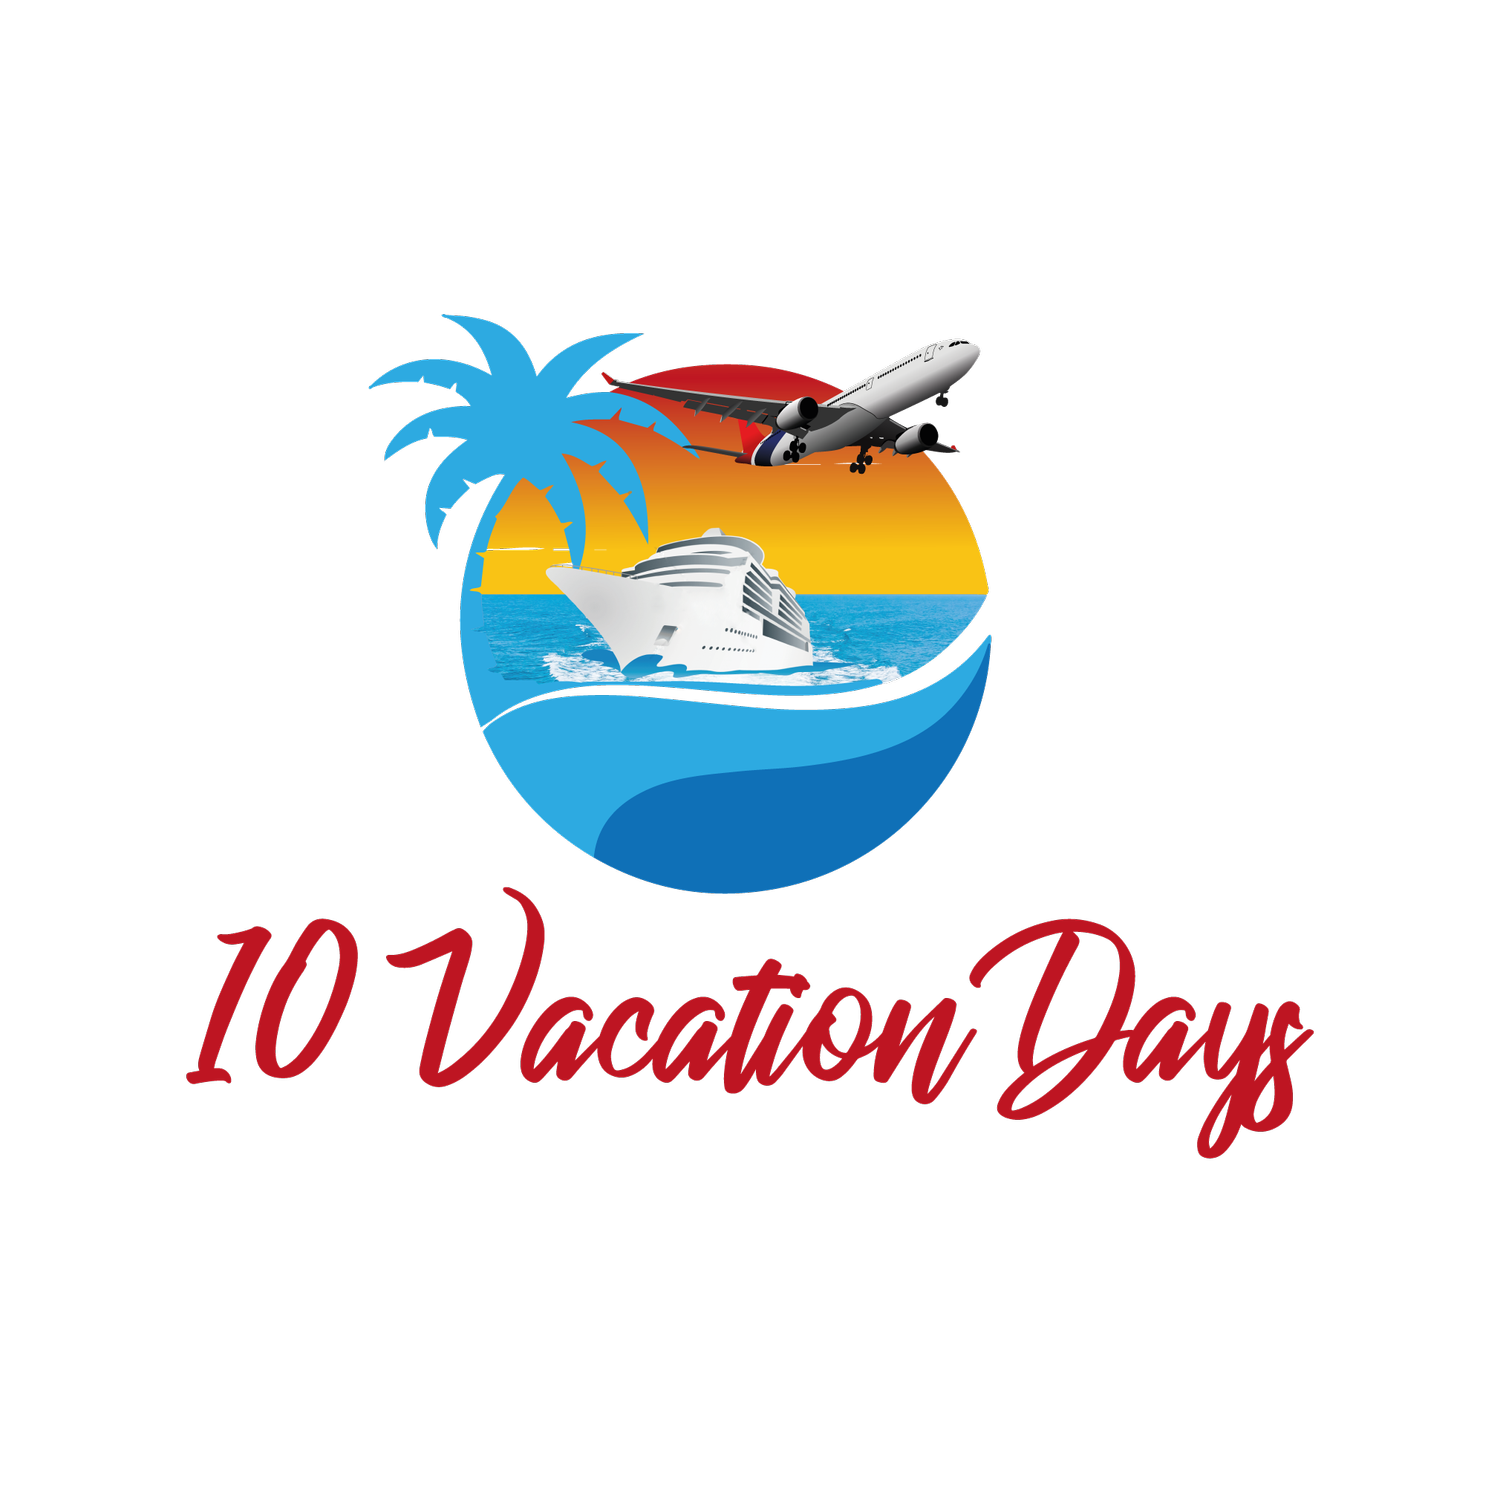 10 Vacation Days, LLC